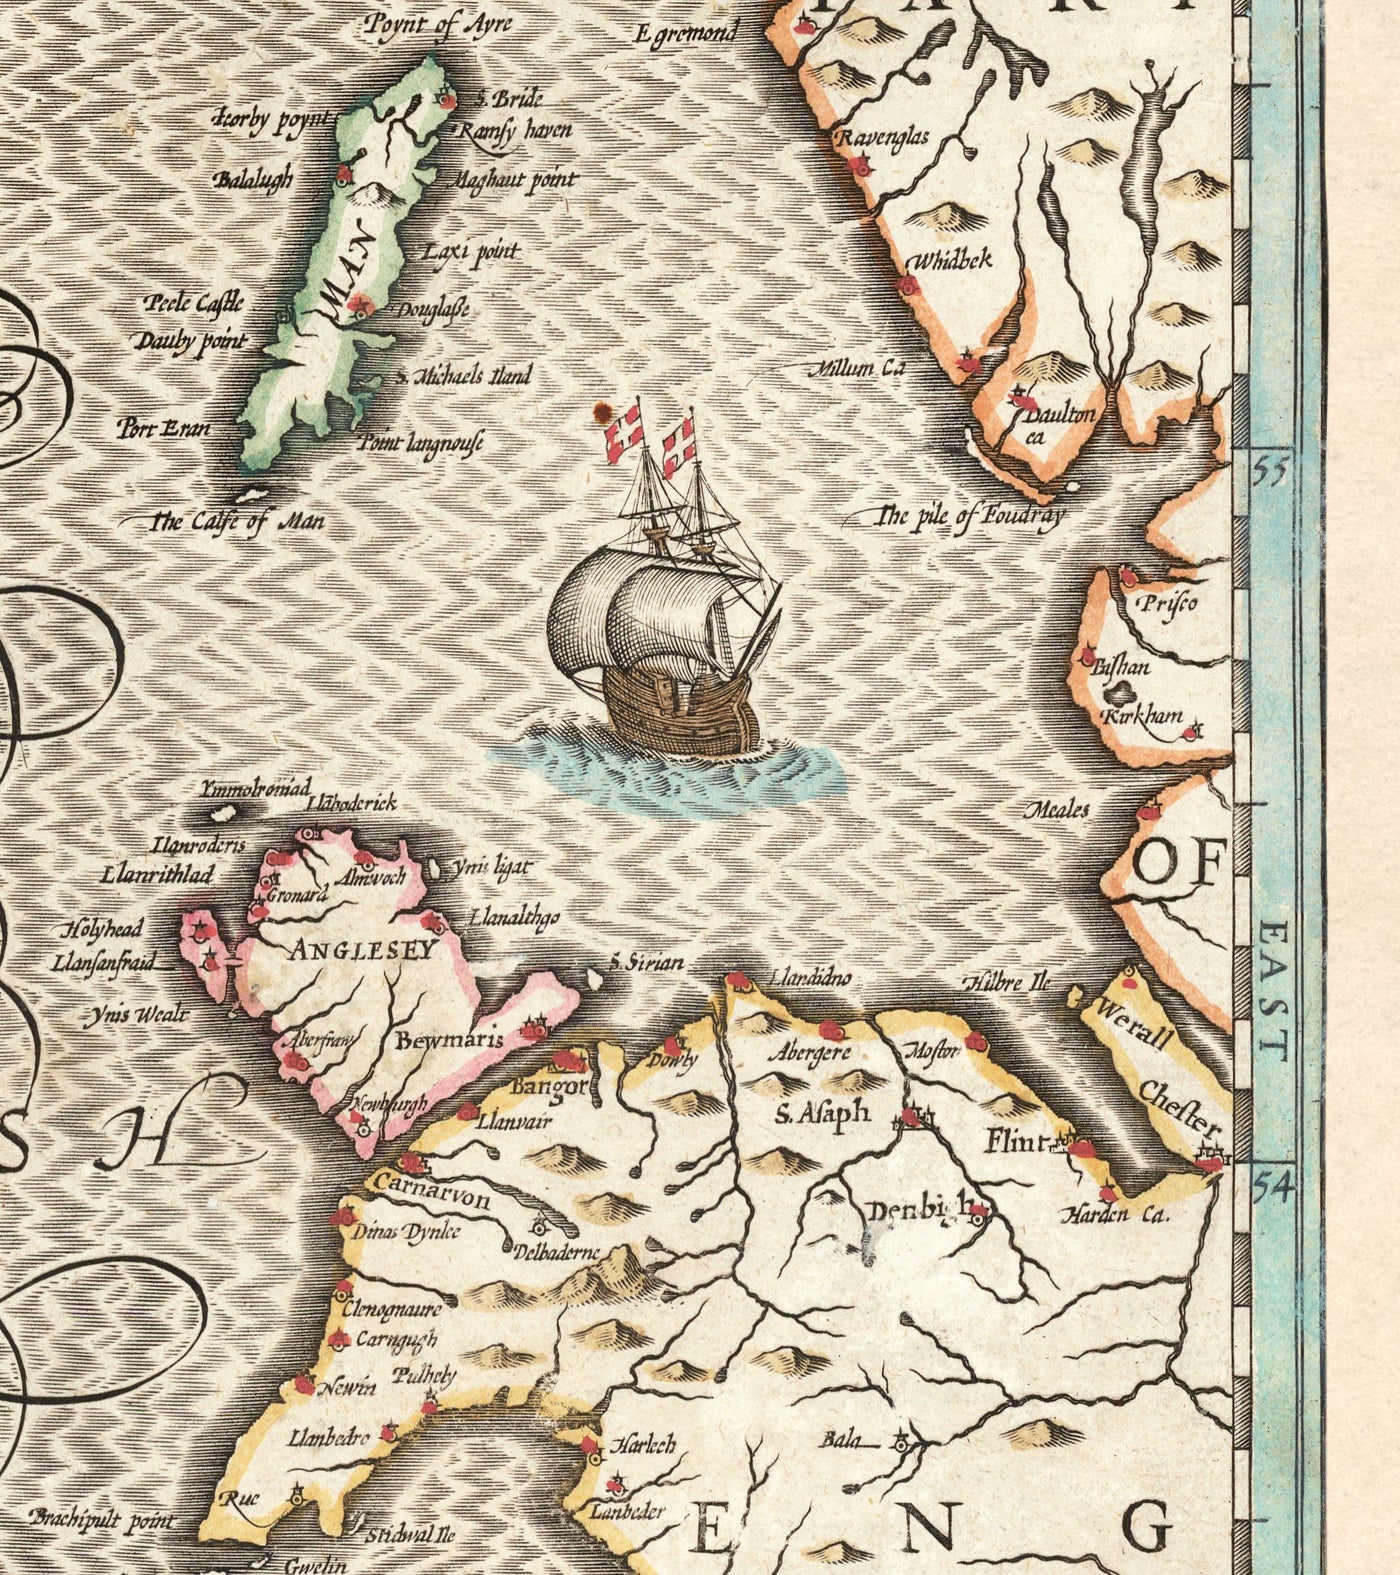 Ancienne carte d'Irlande, Éireann 1611 par John Vitesse - Belle carte vintage antique